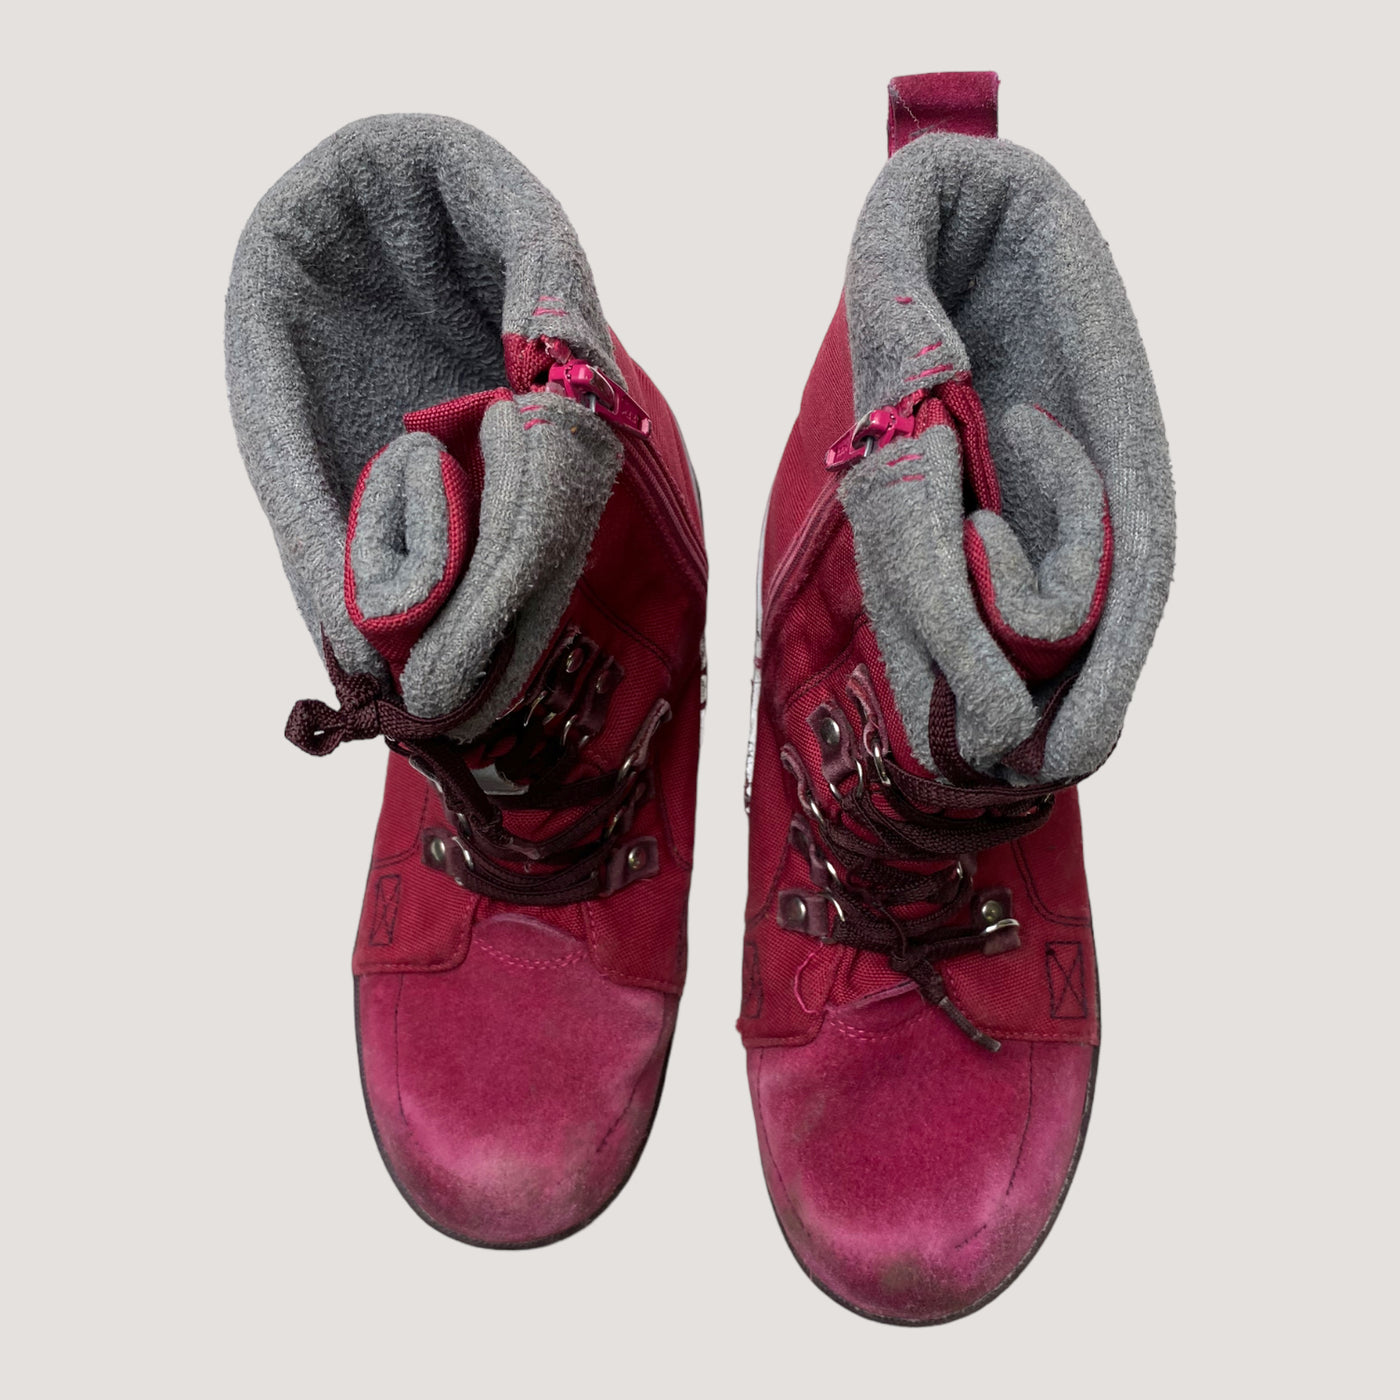 Reima midseason shoes, hot pink | 36